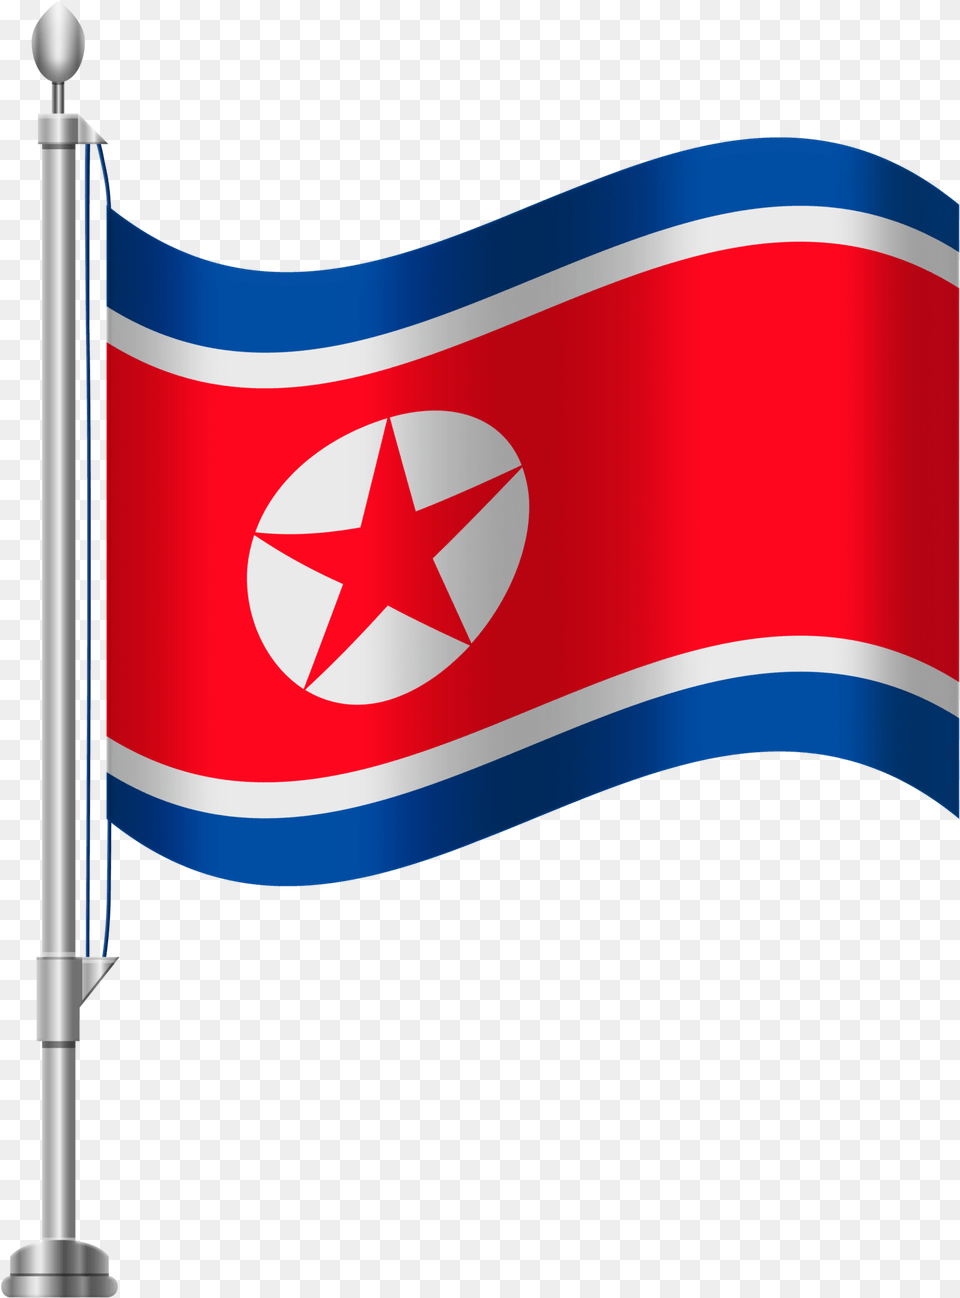 North Korea Flag Images Transparent Ethiopia Flag Clipart, North Korea Flag, Dynamite, Weapon Png Image